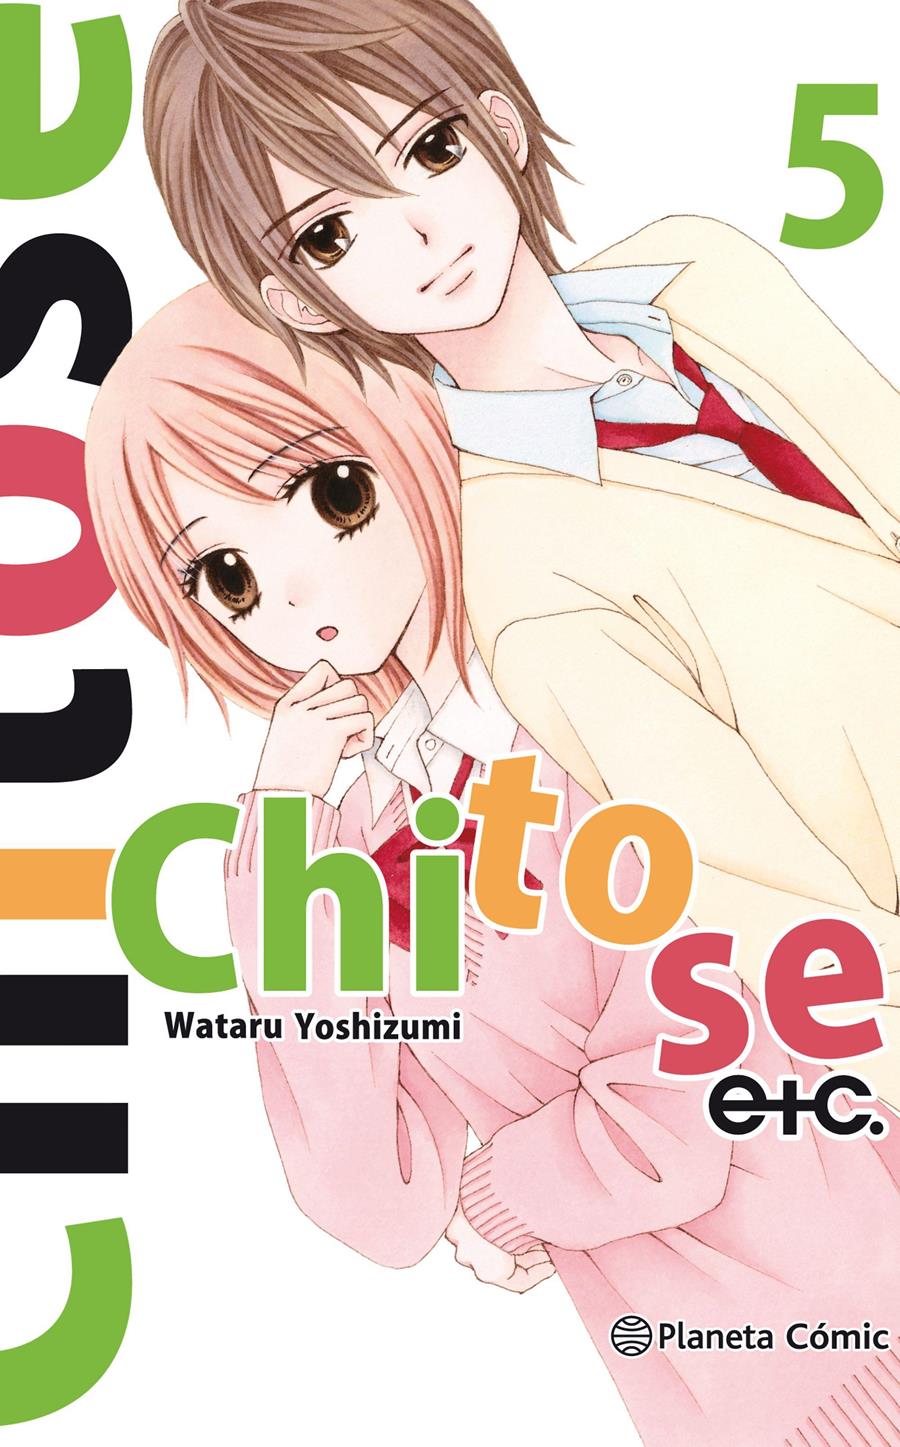 Chitose Etc nº 05/07 | N0118-PLA03 | Wataru Yoshizumi | Terra de Còmic - Tu tienda de cómics online especializada en cómics, manga y merchandising